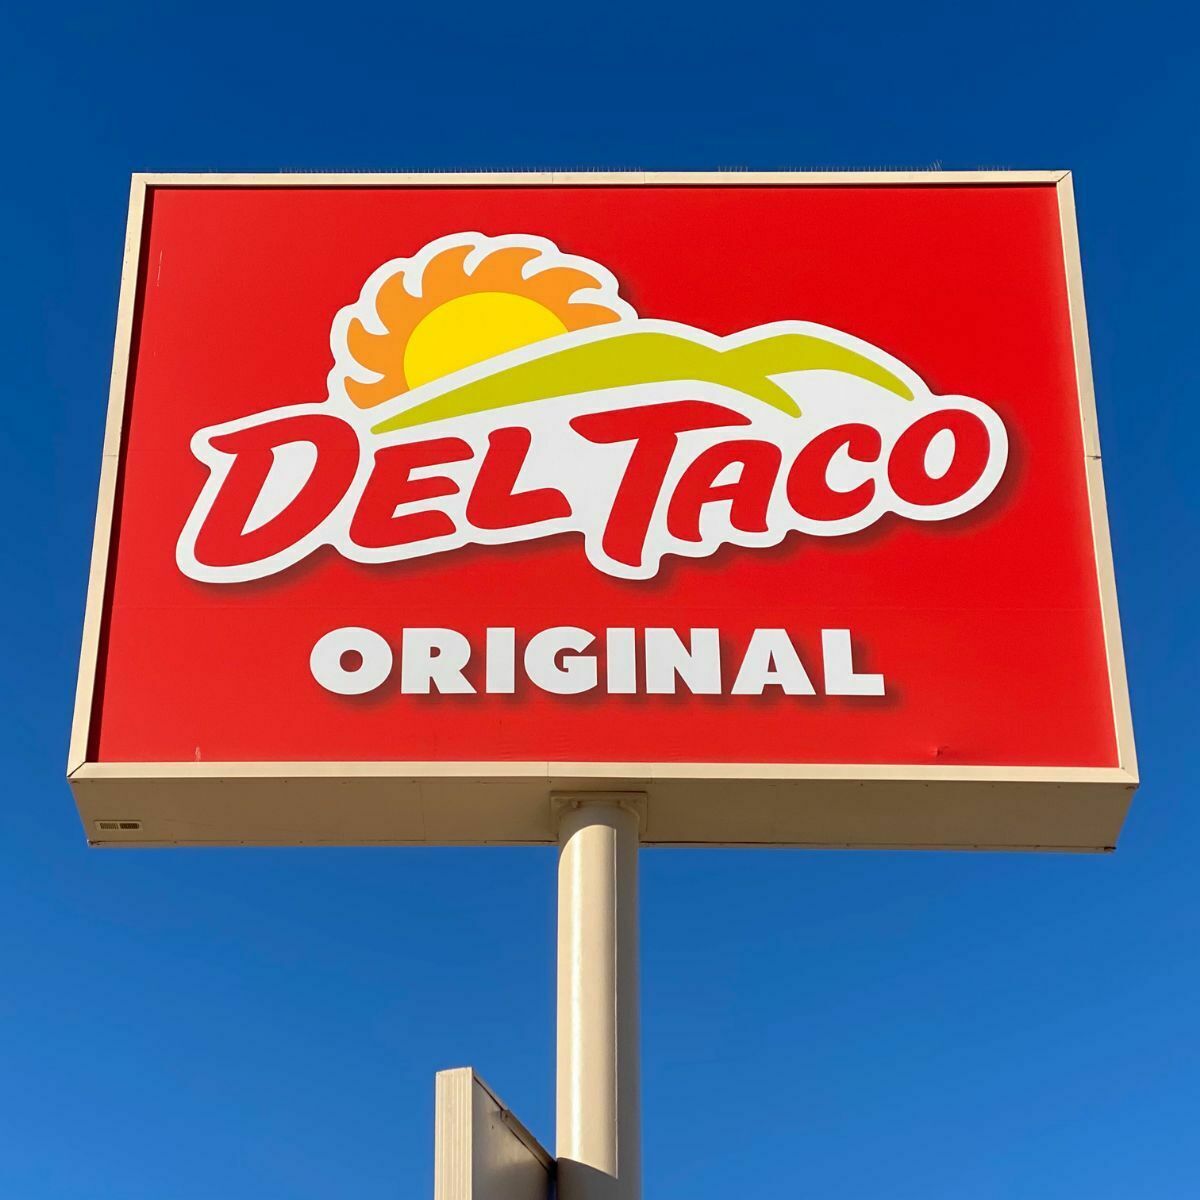 Original Del Taco Barstow: Best Road Trip Food